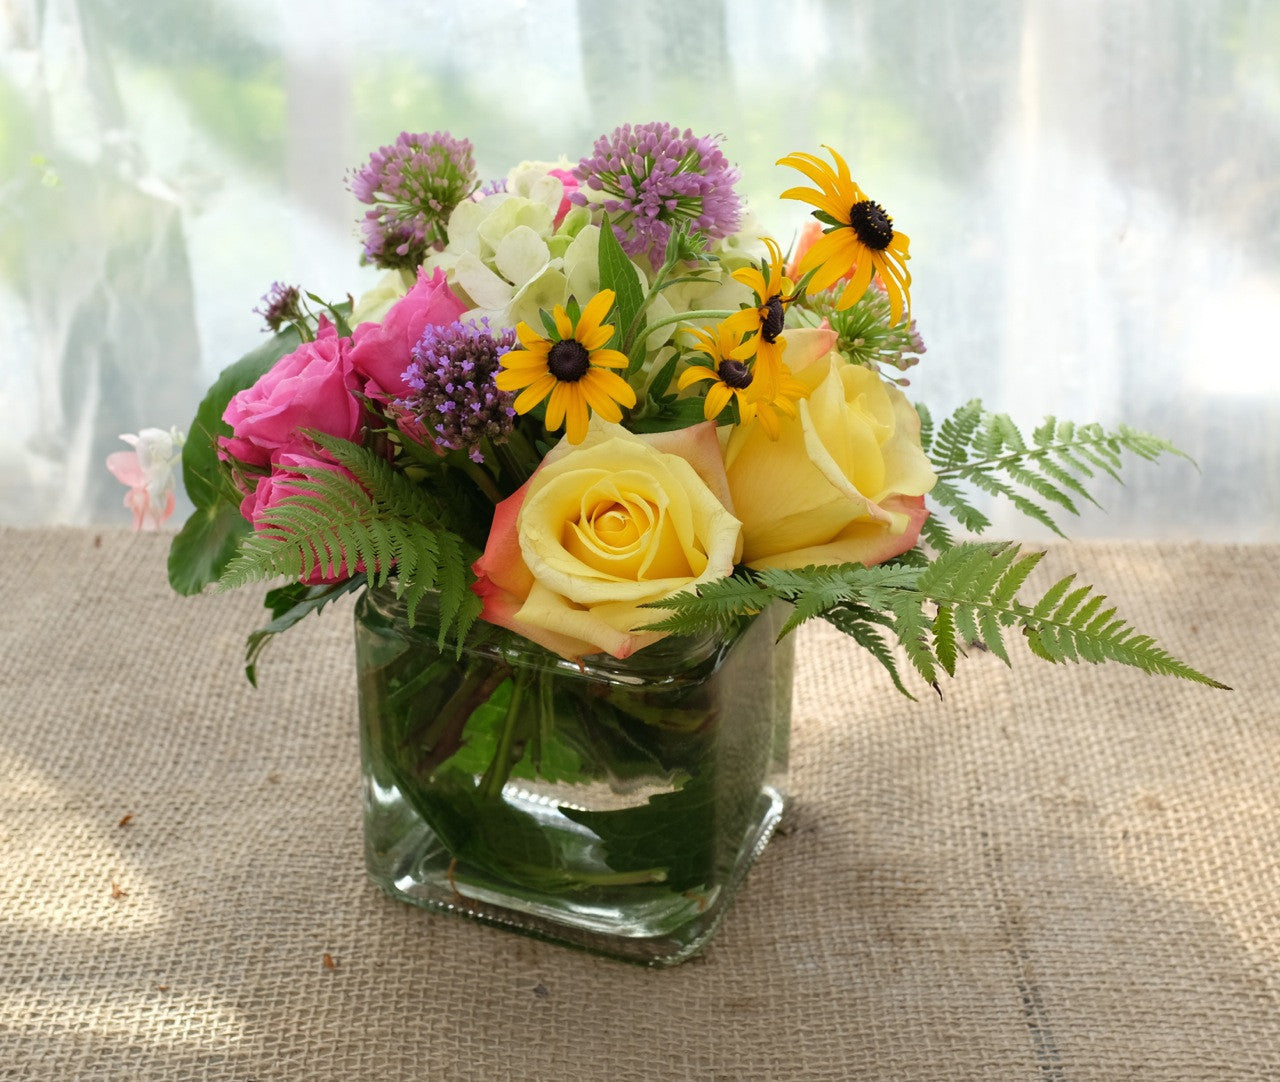 Austin Flower Arrangement: Summer Flowers including Allium, Roses, and Black-eyed Susans. Designed by Michler's in Lexington, KY